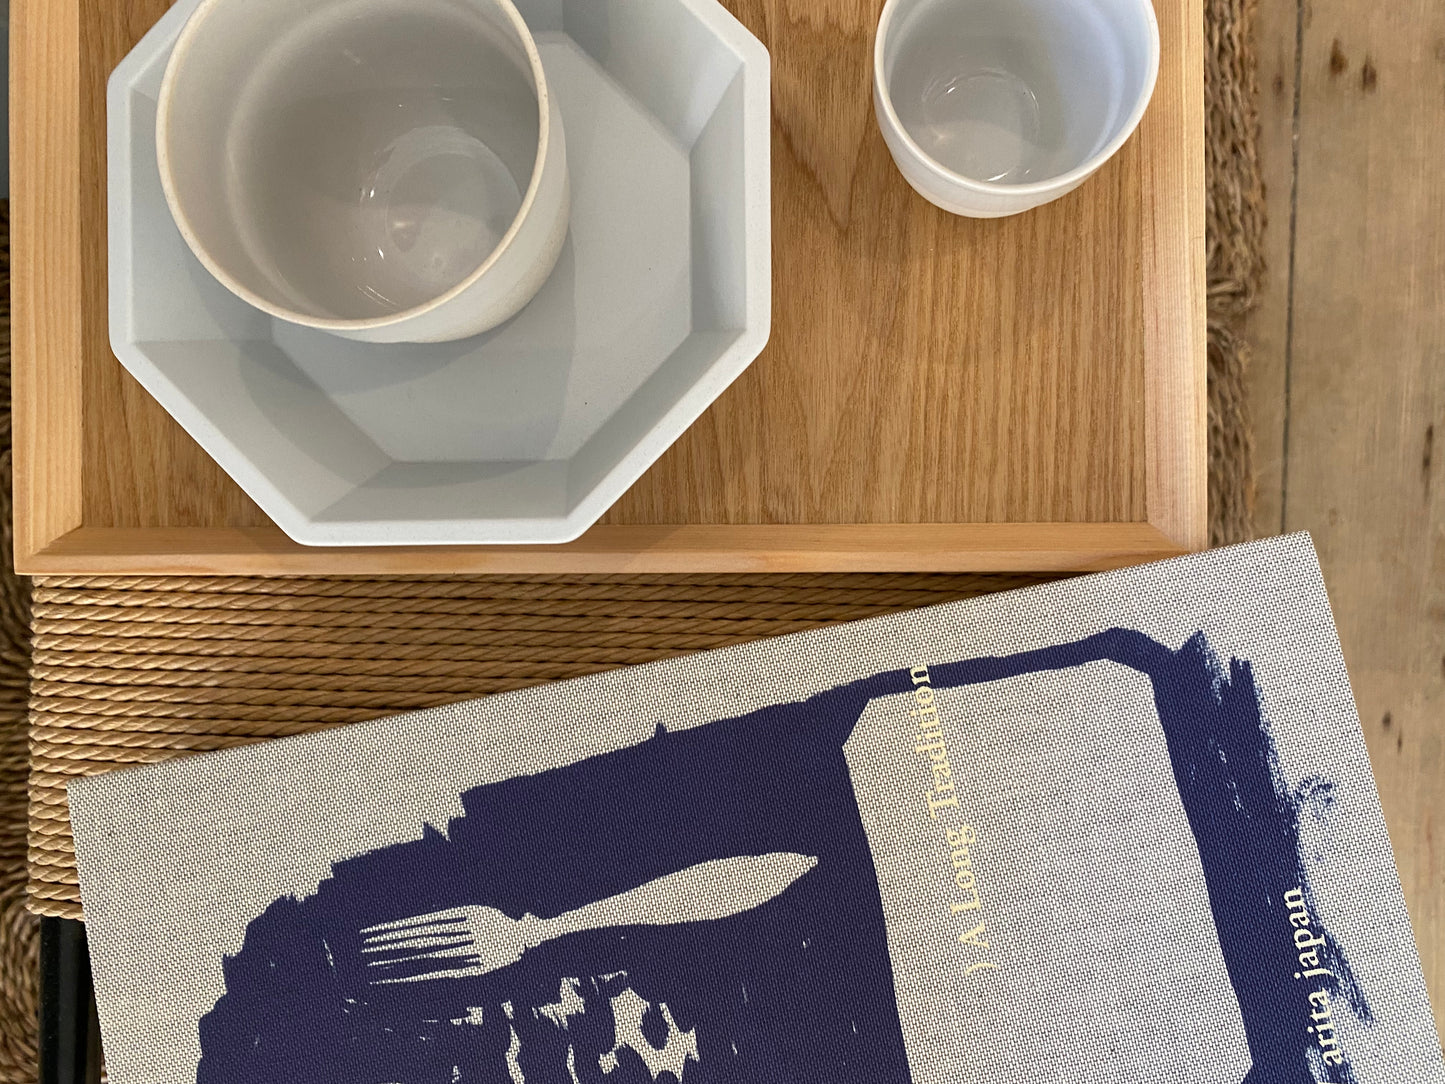 1616/Arita Japan - Coffee table book